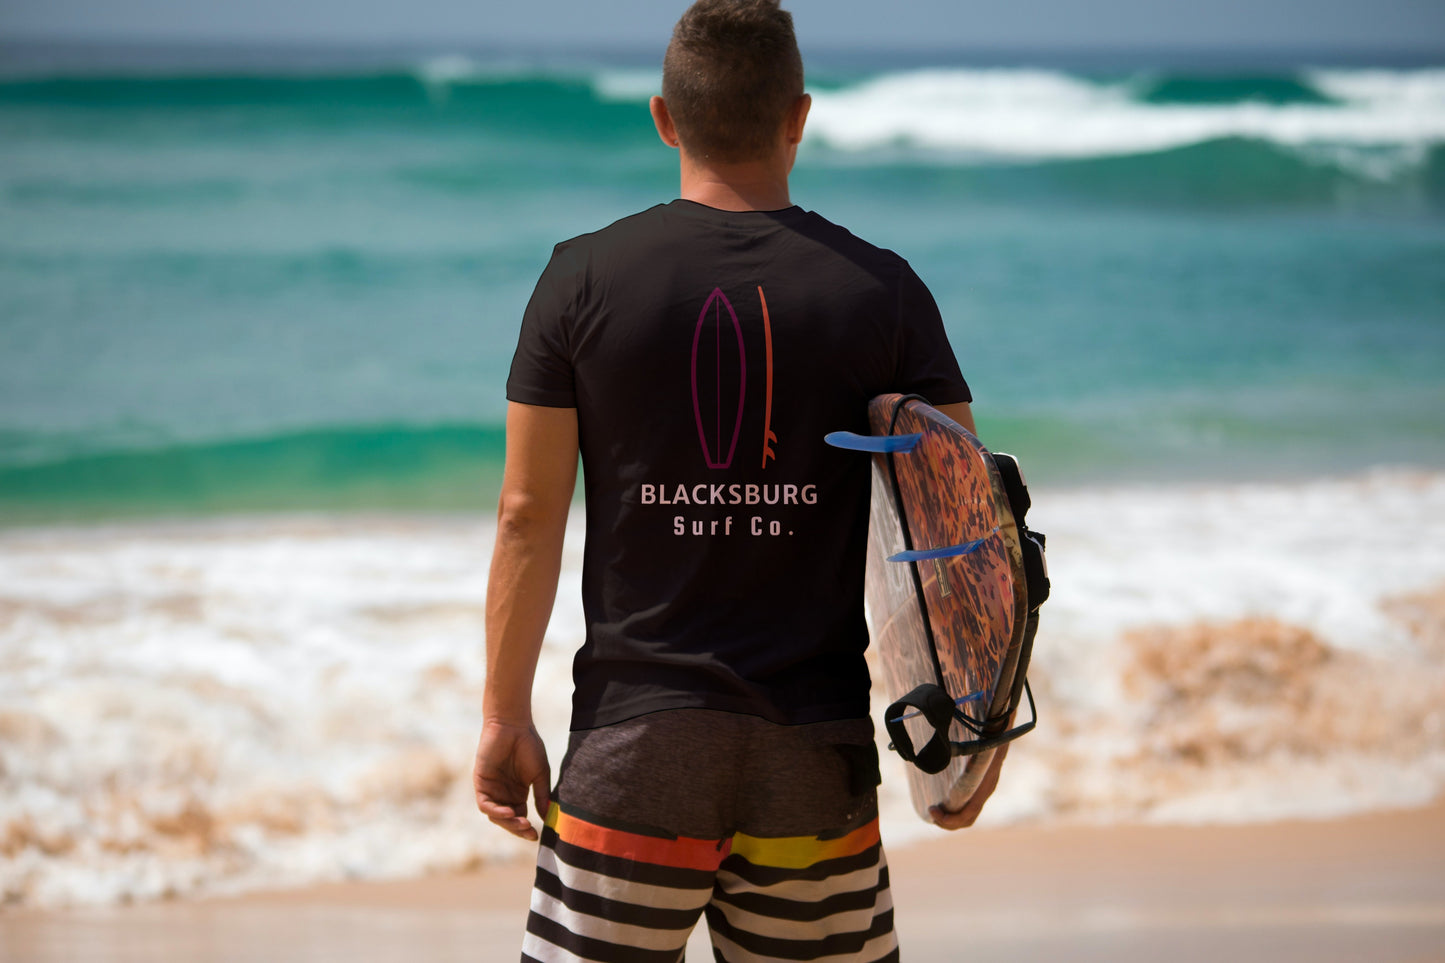 Blacksburg Surf Co. Black Surfboard Shirt